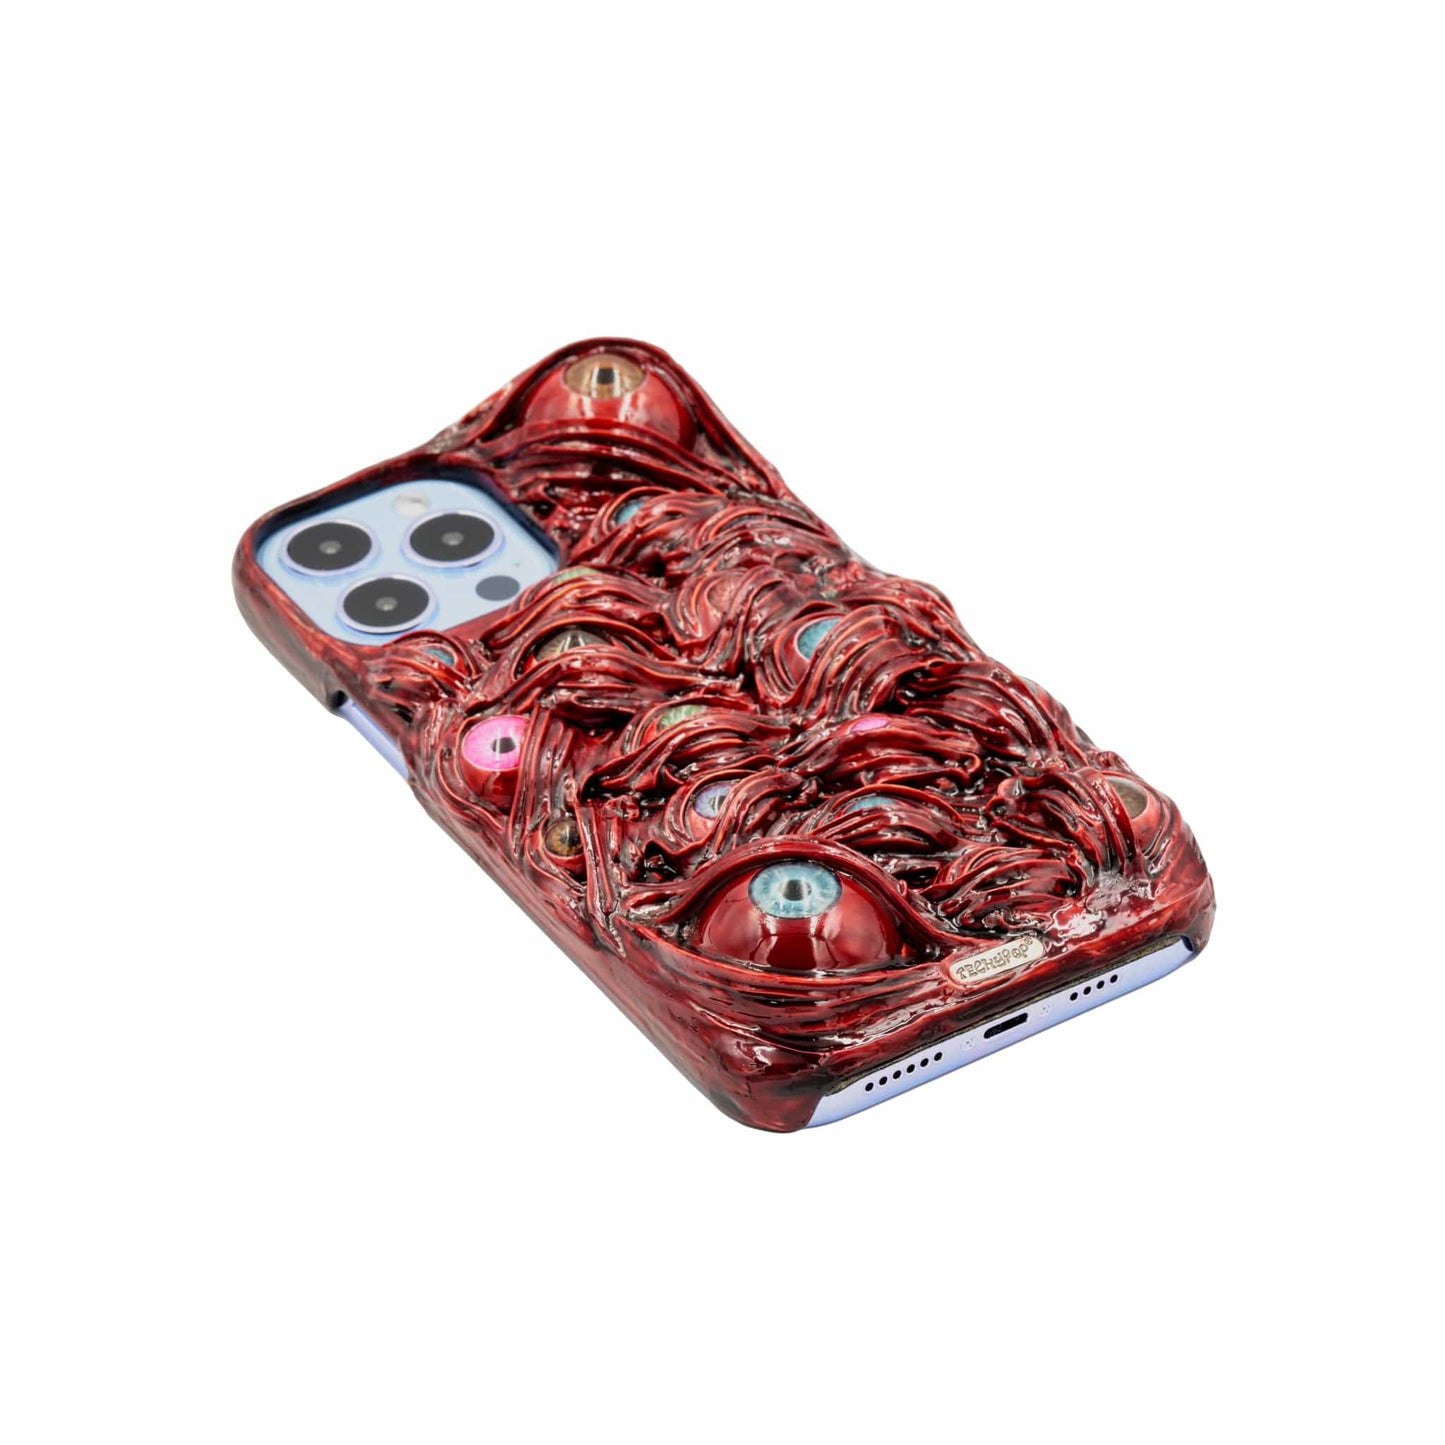 techypopcom iPhone Case Blood Eyeball 100% Handmade Designer iPhone Case For All iPhone Models